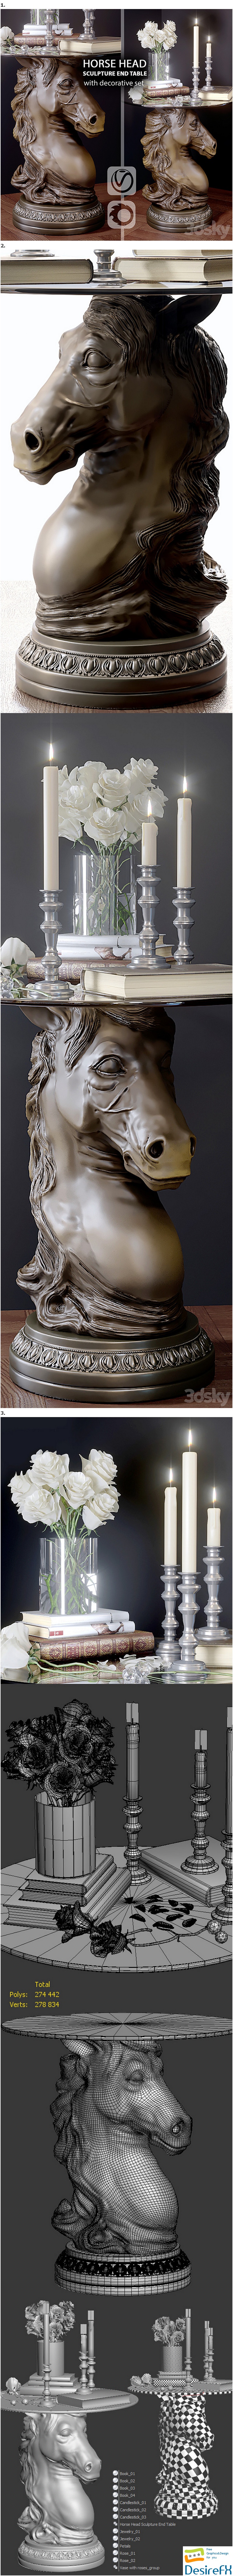 Horse Head Sculpture End Table and decorative set 3D Model